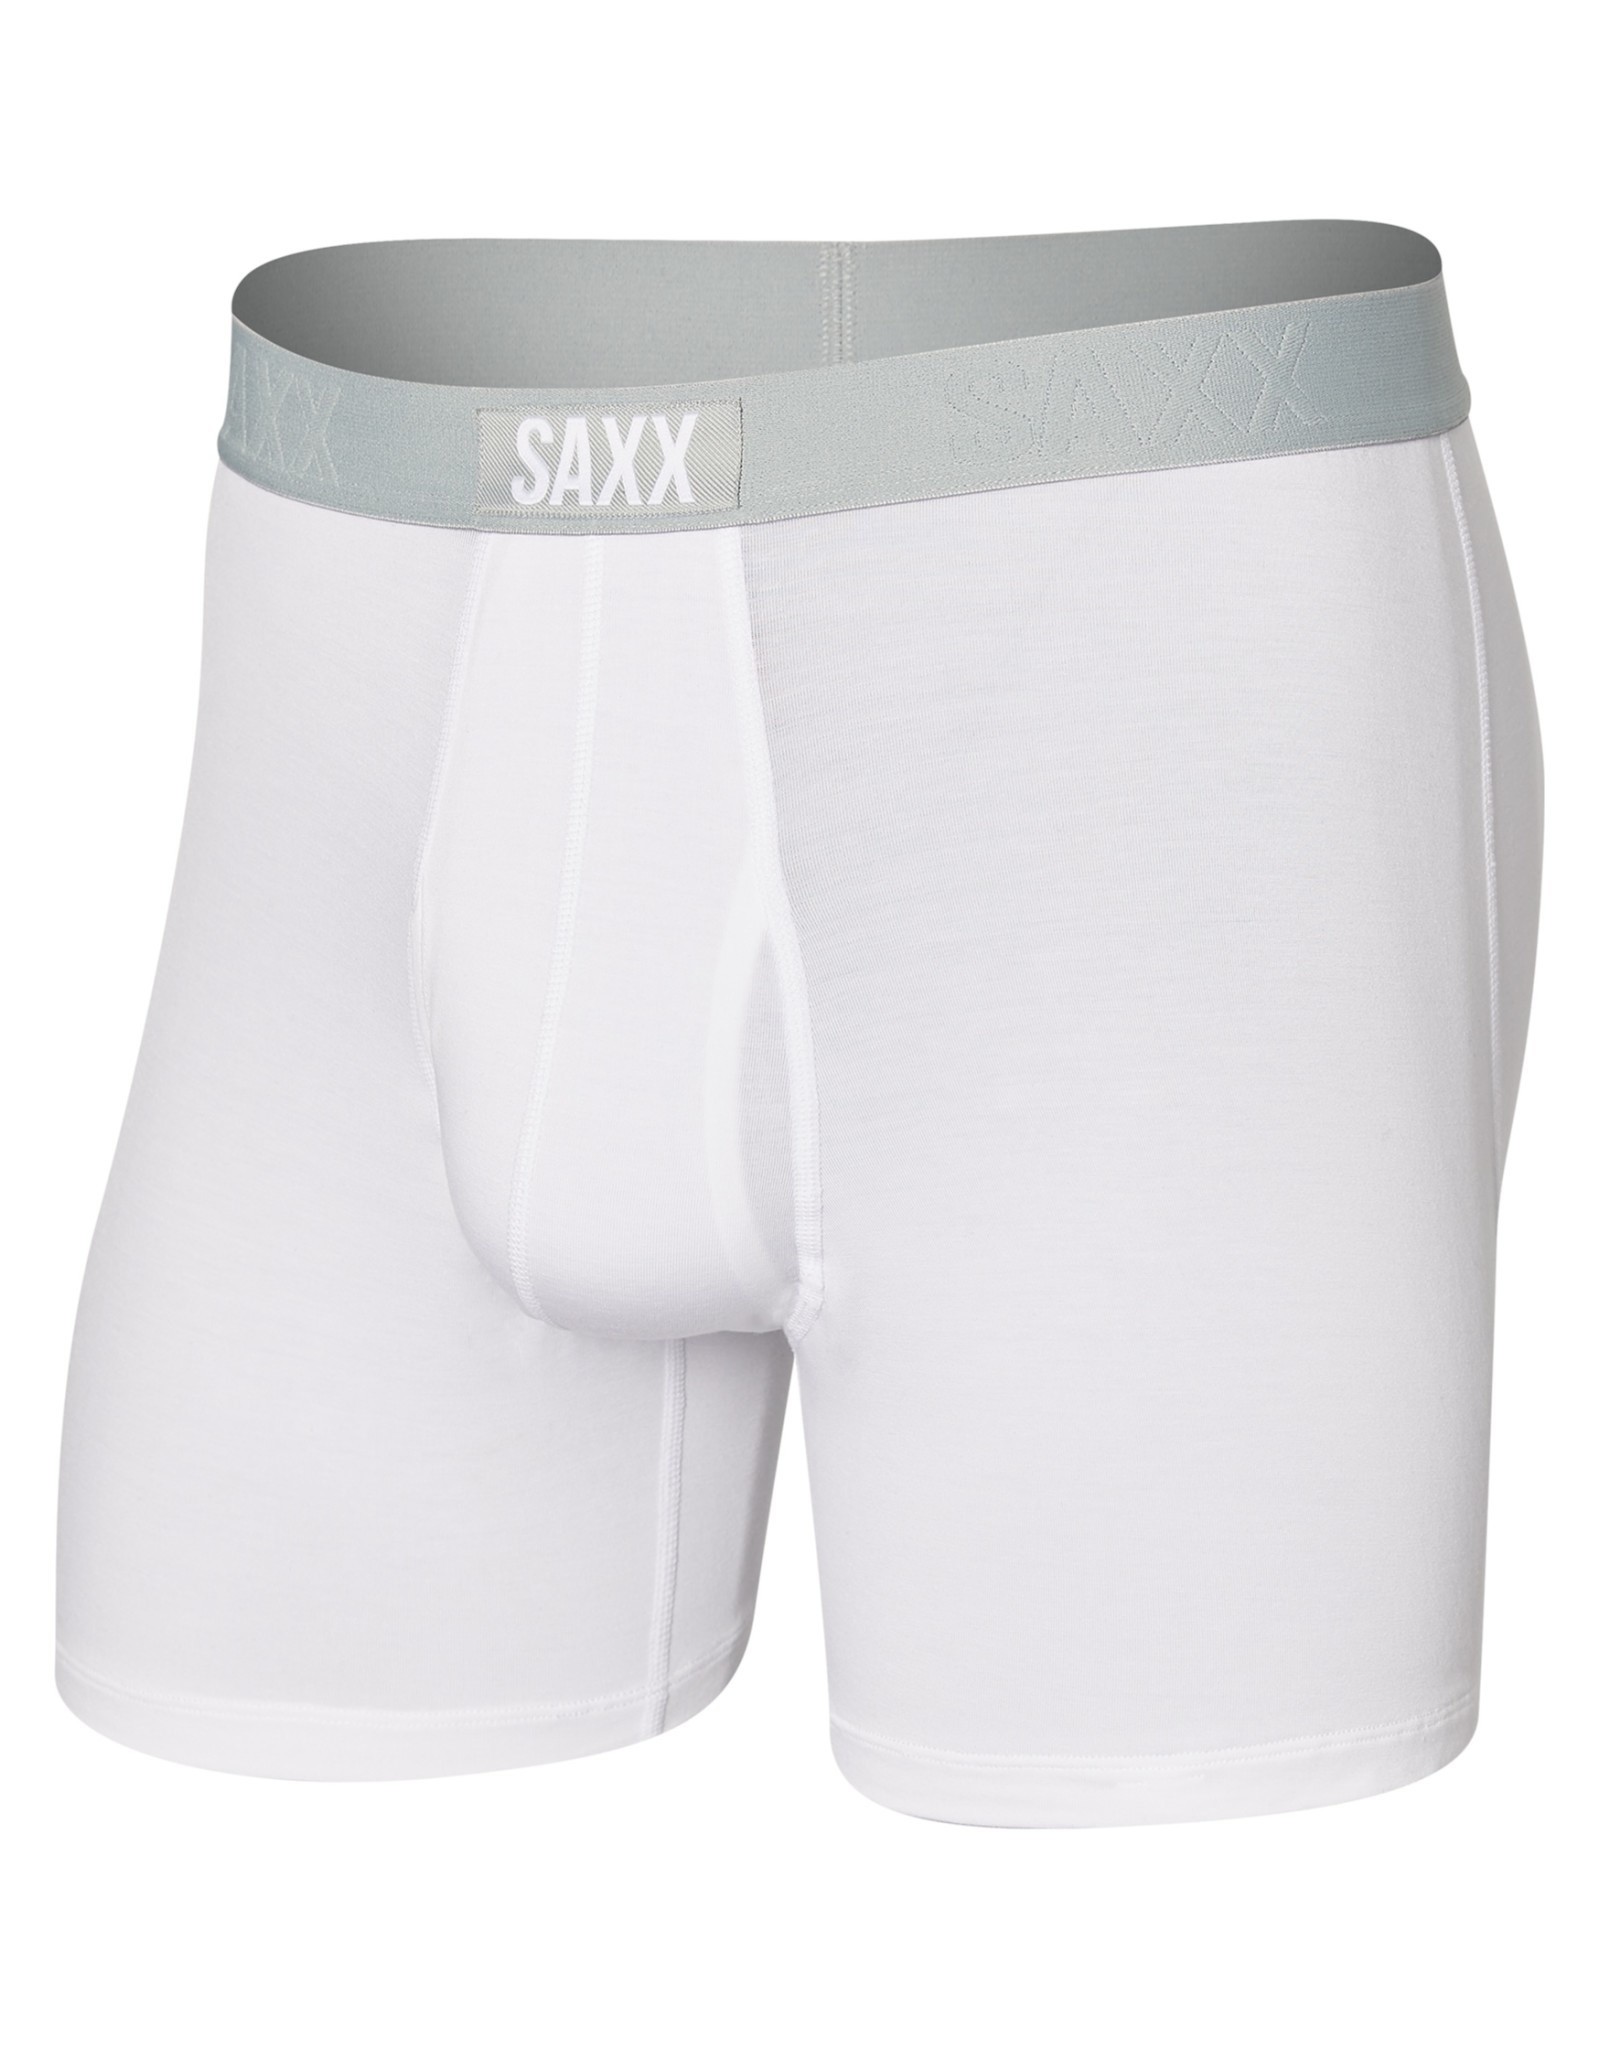 Saxx Underwear L67145 Mens White Droptemp Fly Boxer Briefs Size